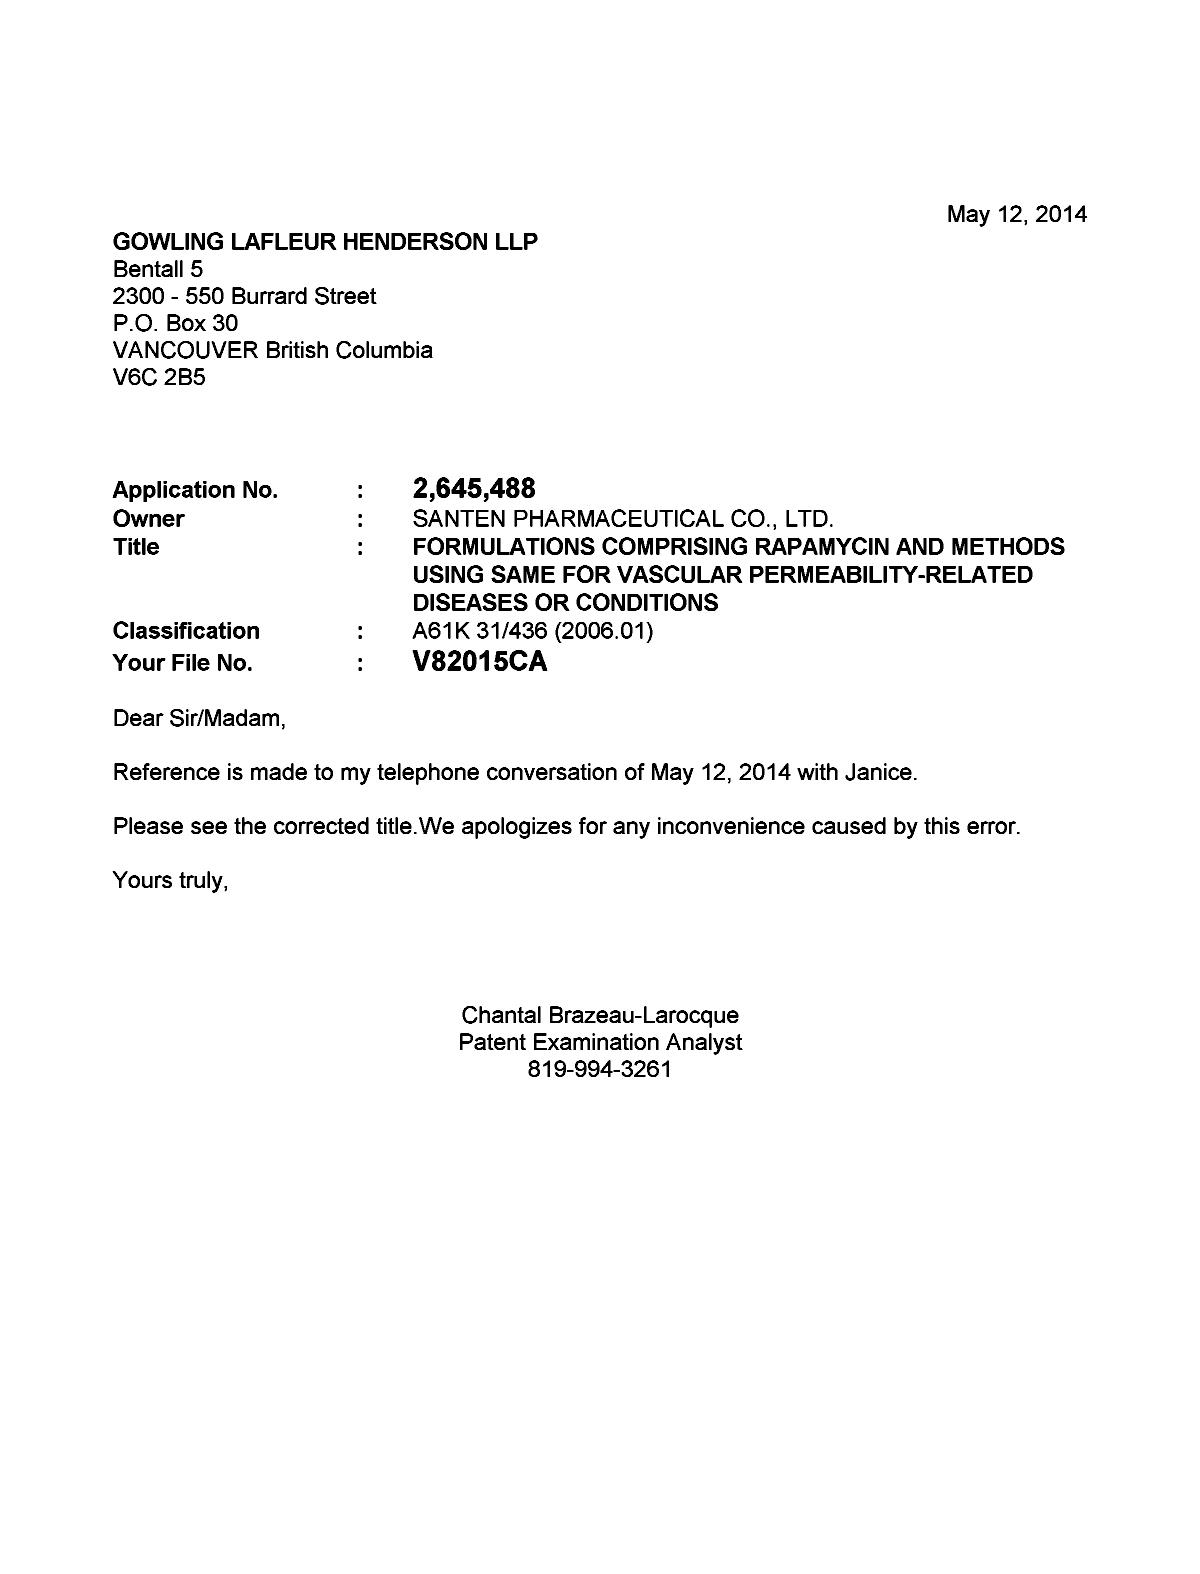 Canadian Patent Document 2645488. Correspondence 20140512. Image 1 of 1